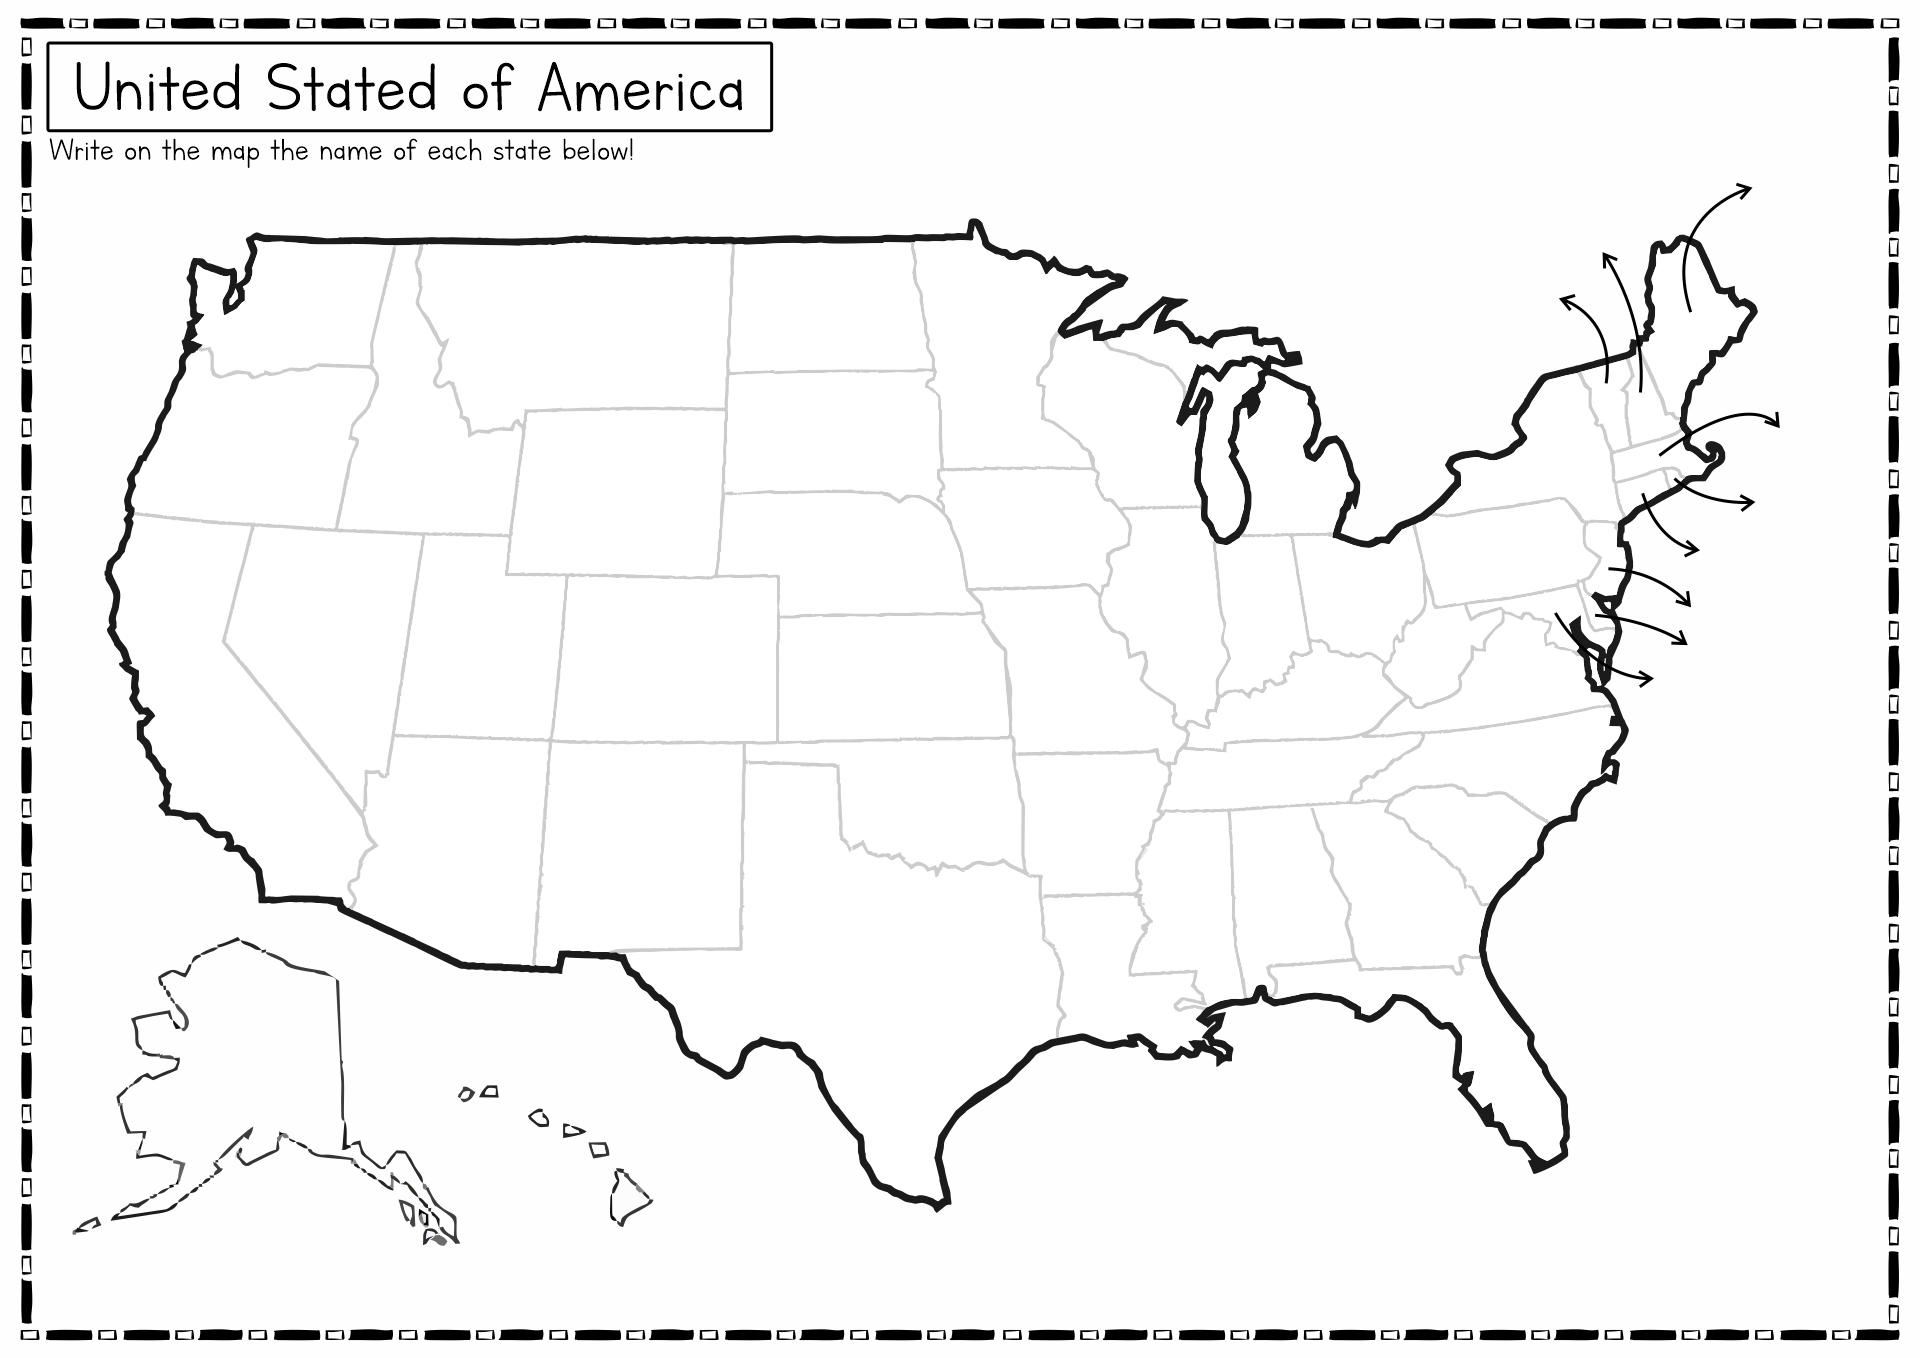 US Geography Worksheets Printable Image